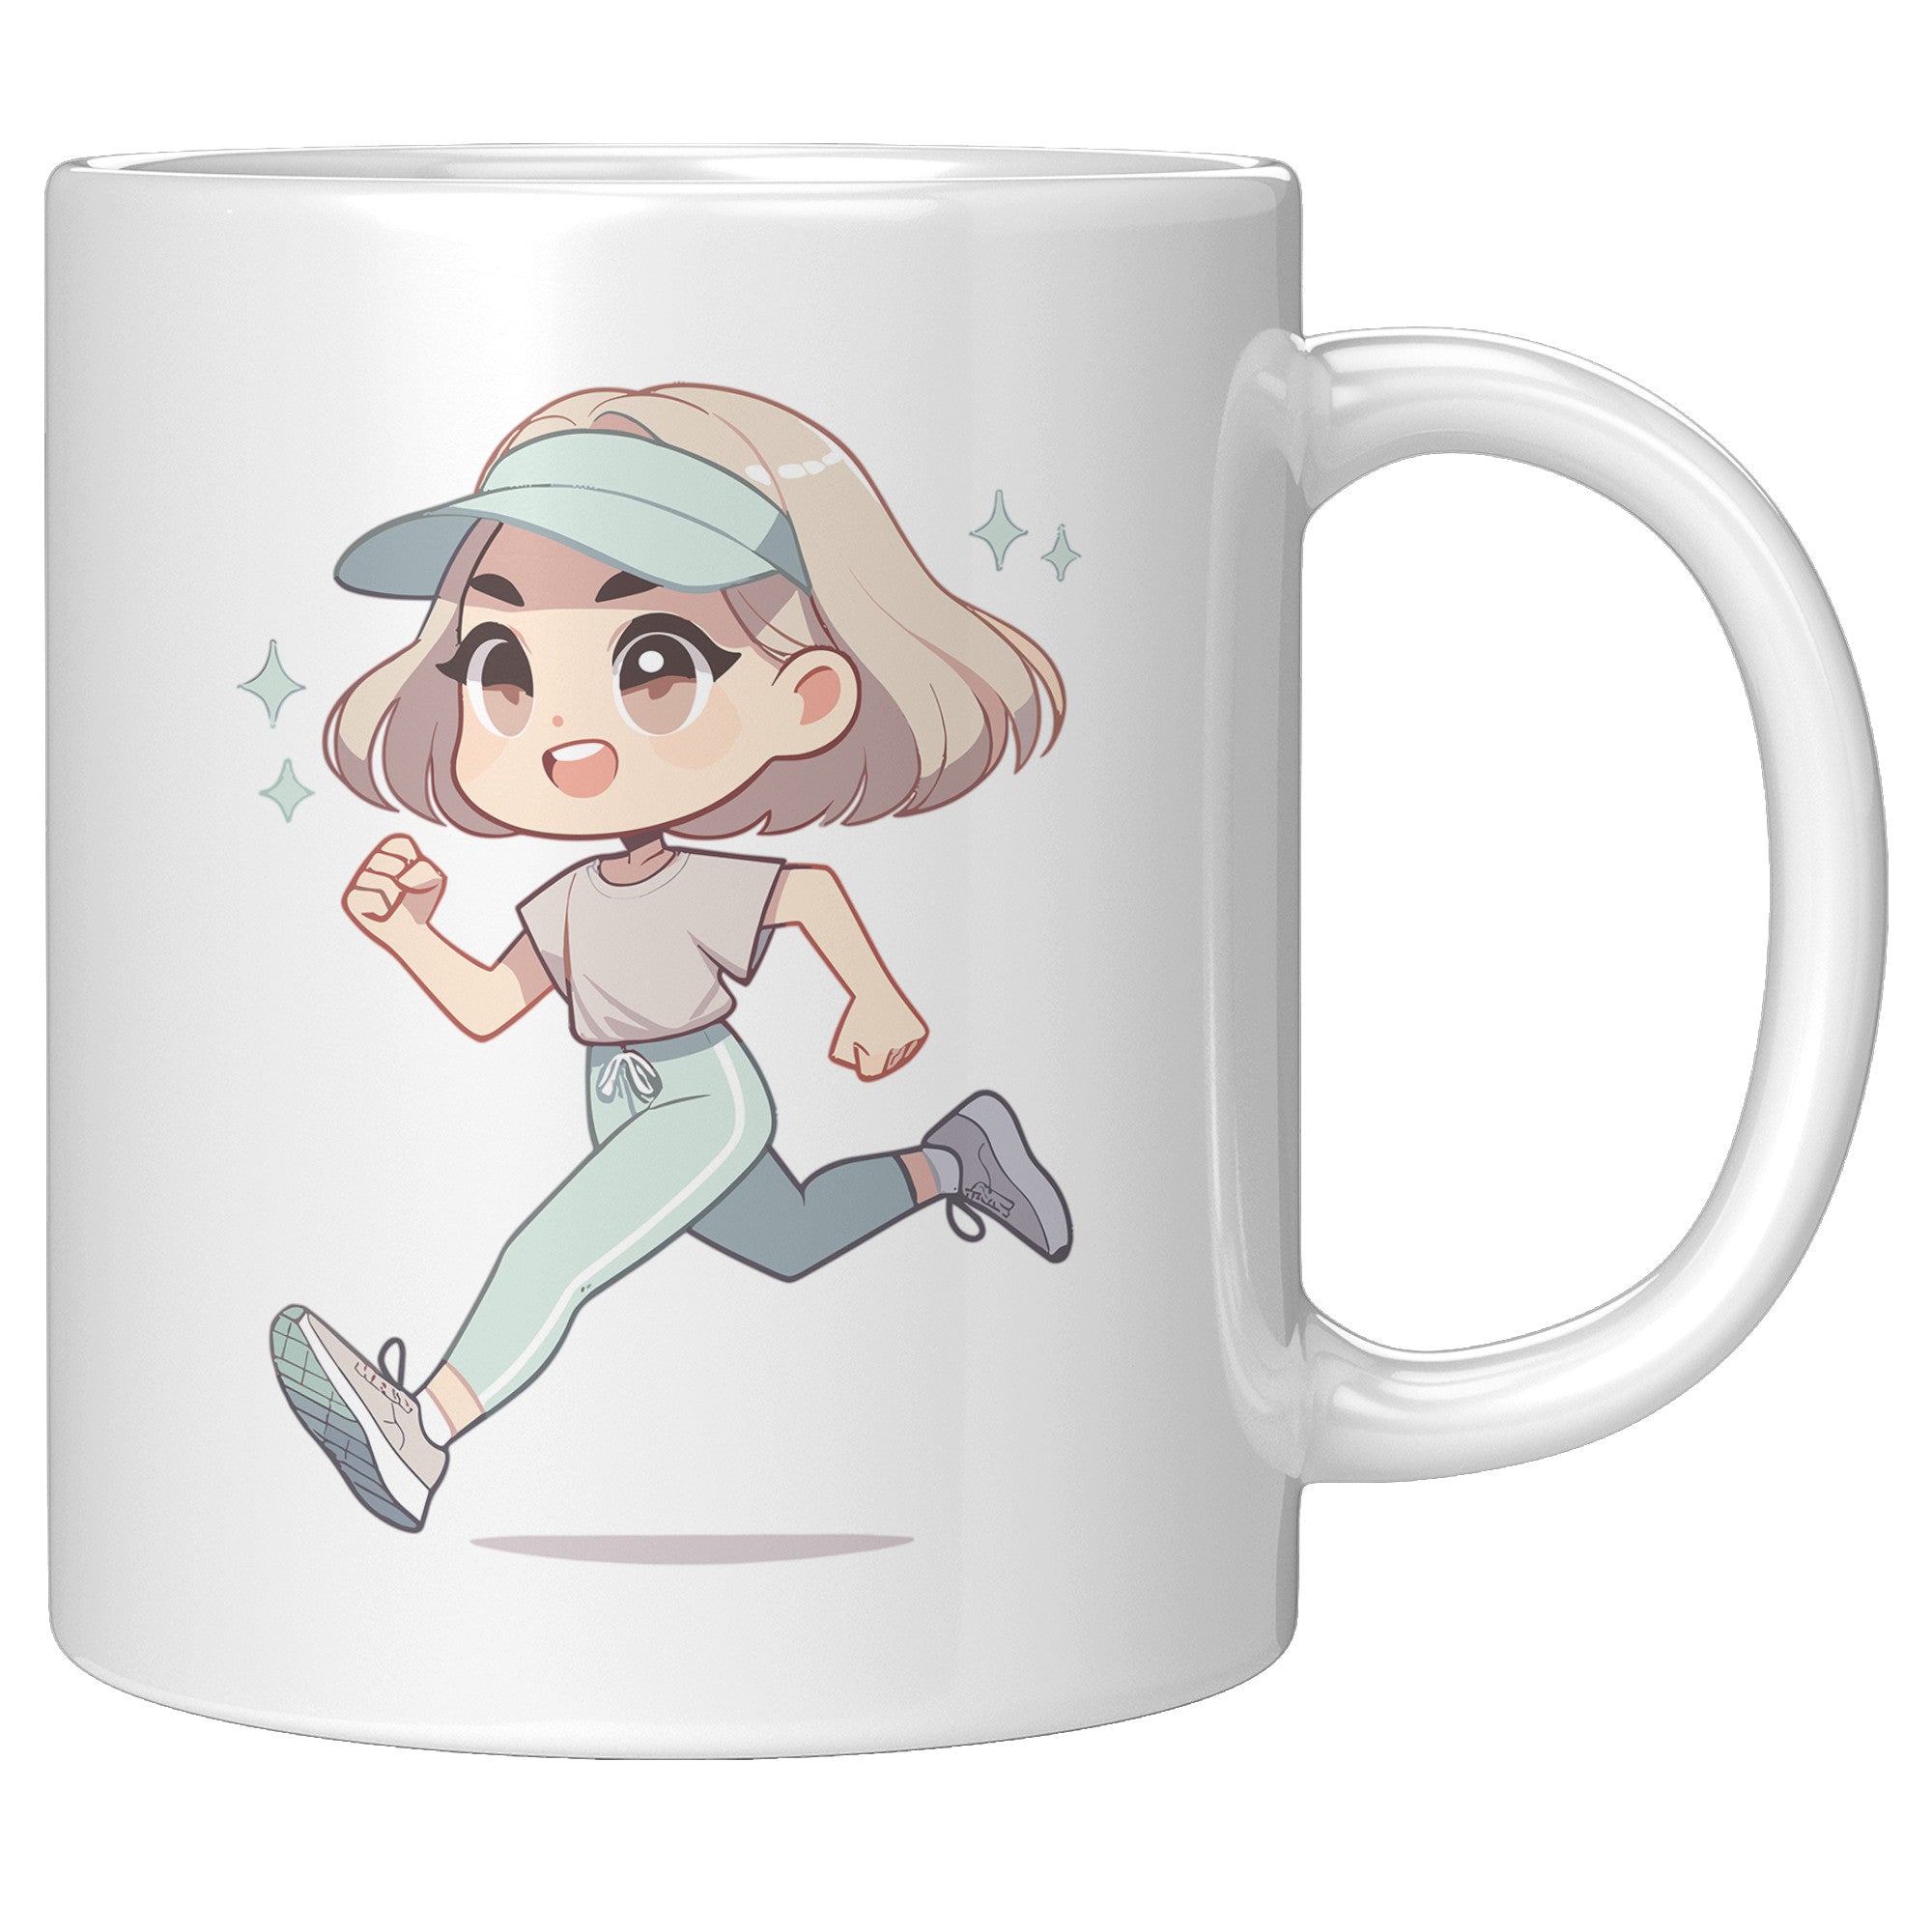 "Female Runner Coffee Mug - Inspirational Running Quotes Cup - Perfect Gift for Women Runners - Motivational Marathoner's Morning Brew" - Q